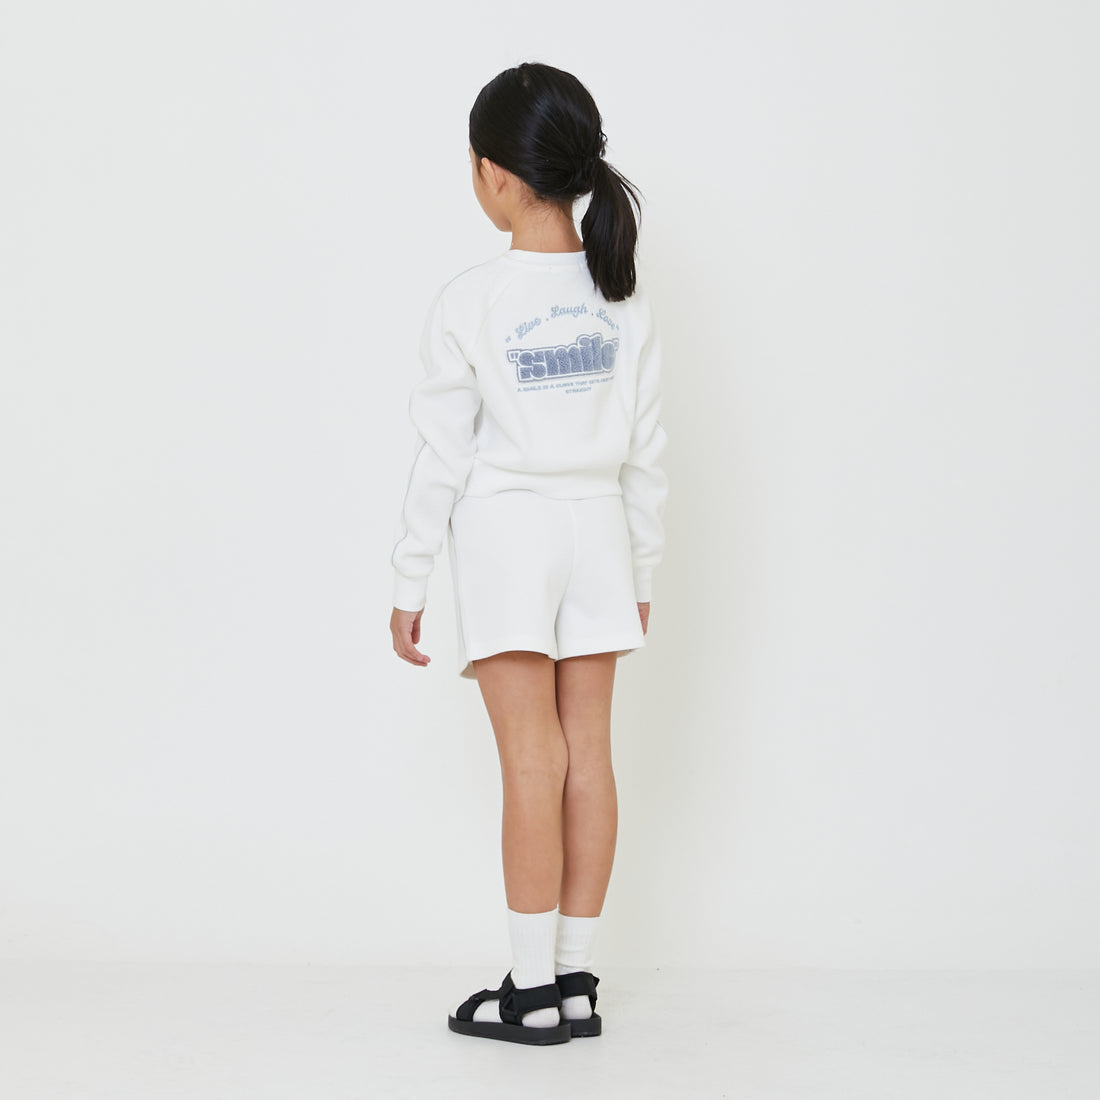 Girl Pique Sweatshirt - SG2401009